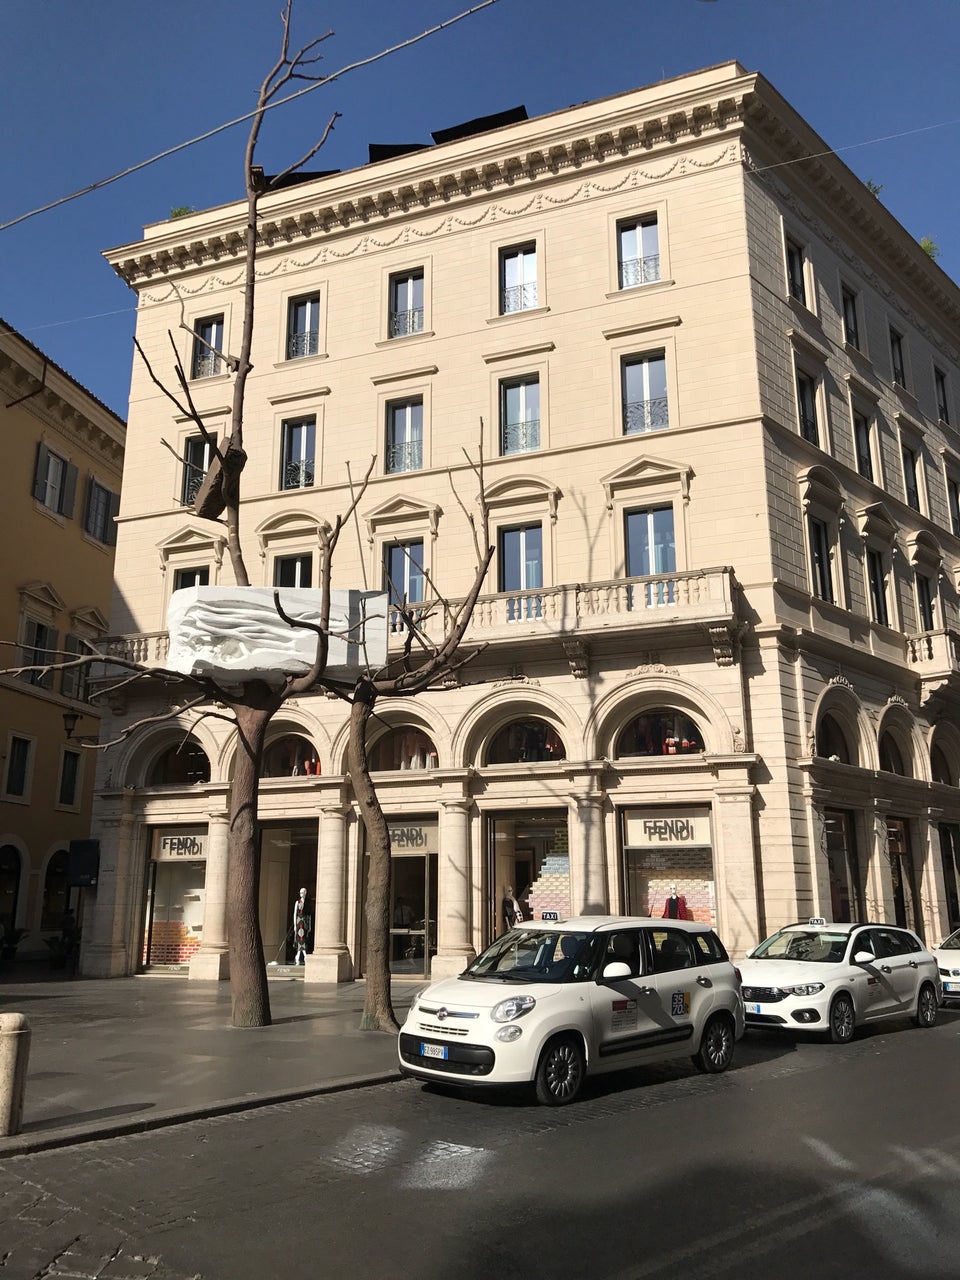 Photo of FENDI Palazzo Rome Flagship Store